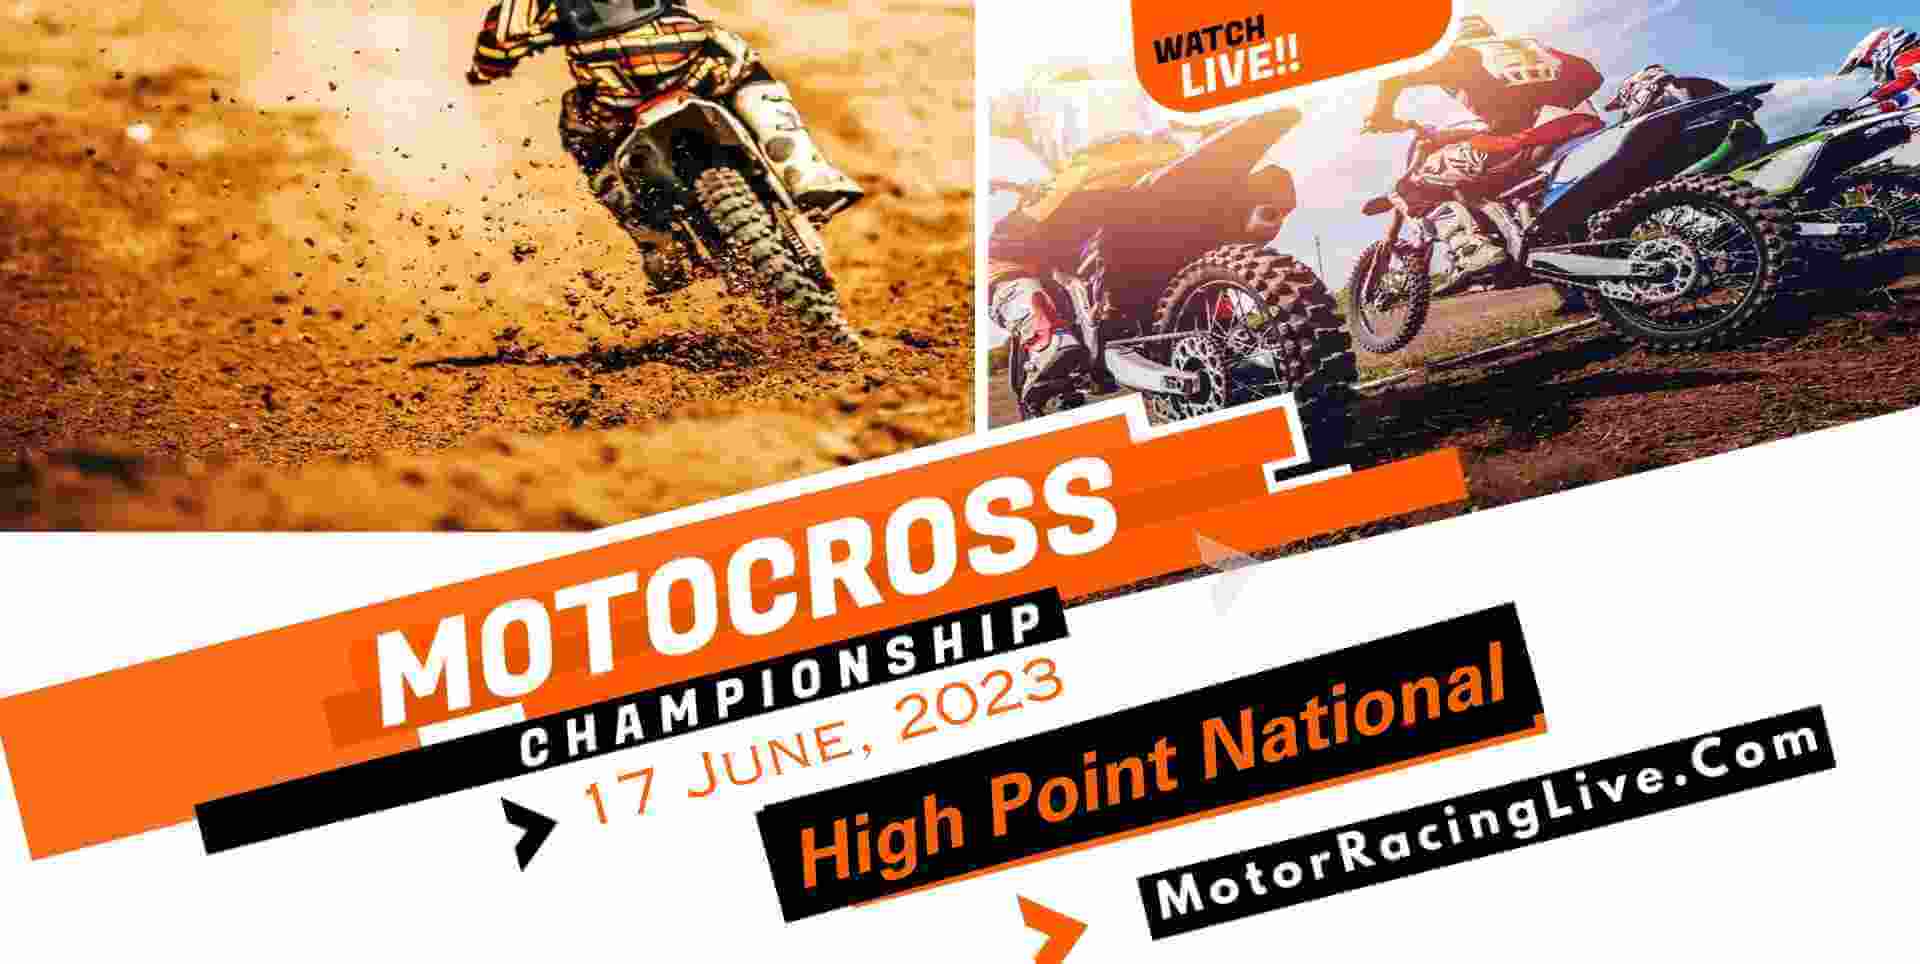 High Point National Live Stream 2023 Pro Motocross